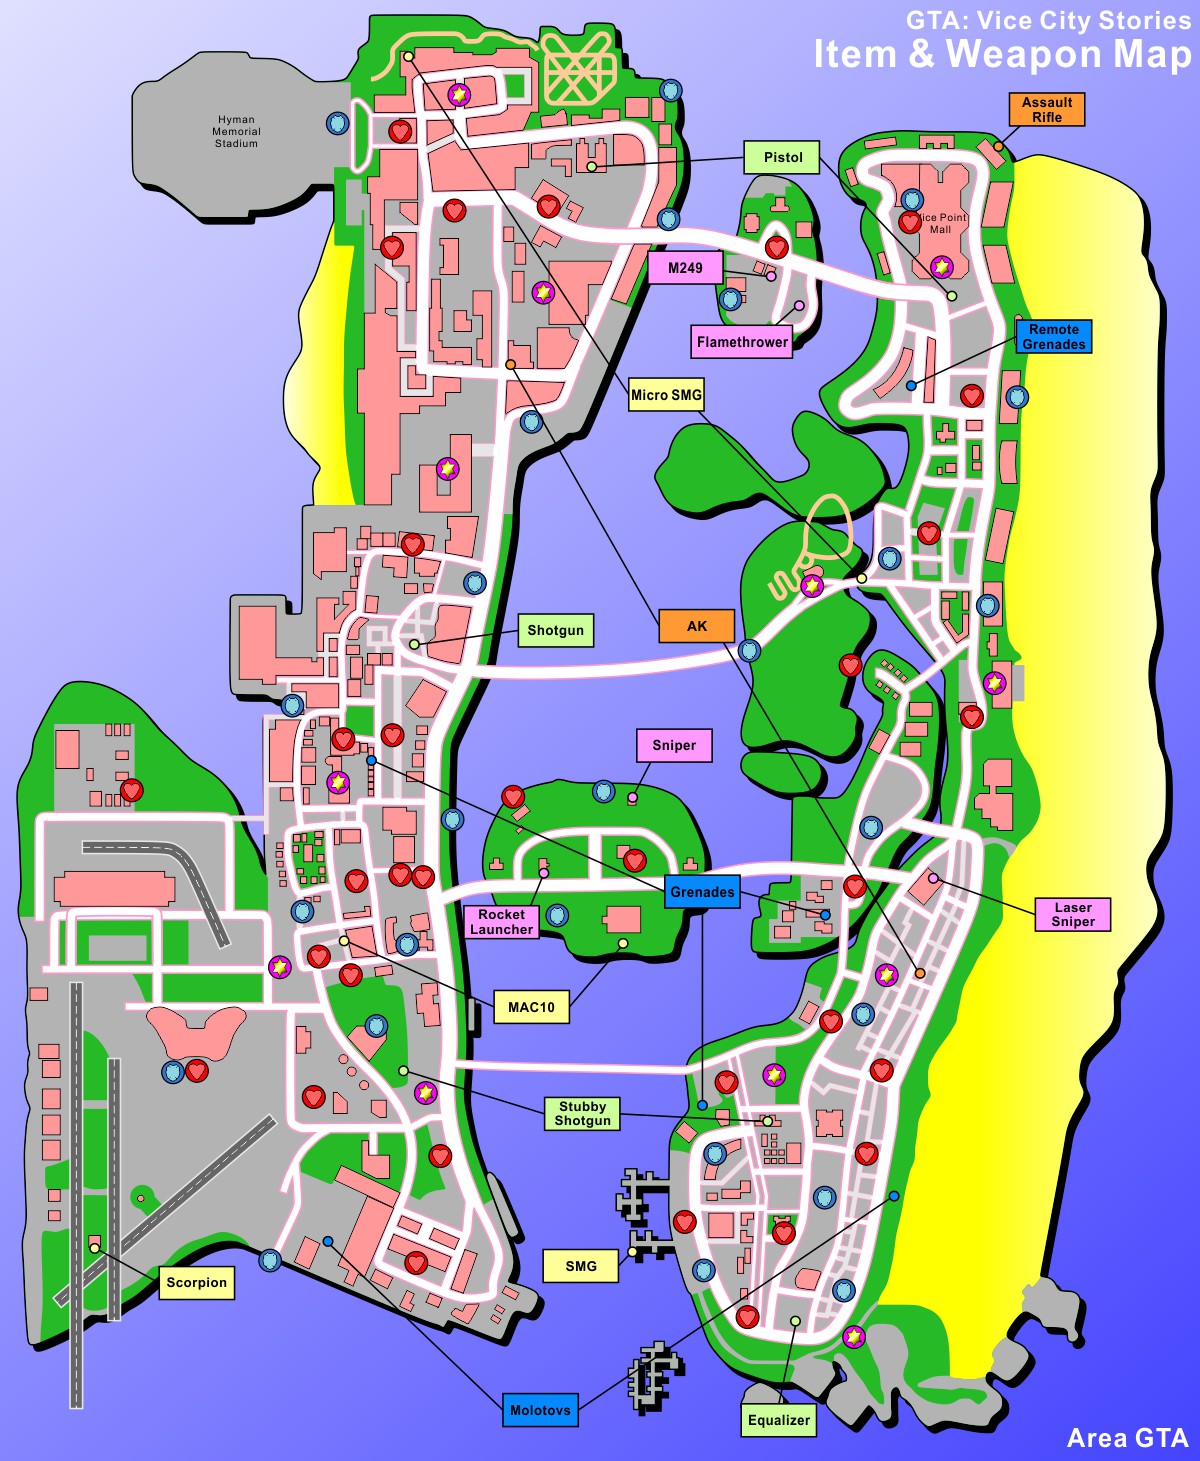 Gta vice city stories maps - mplena